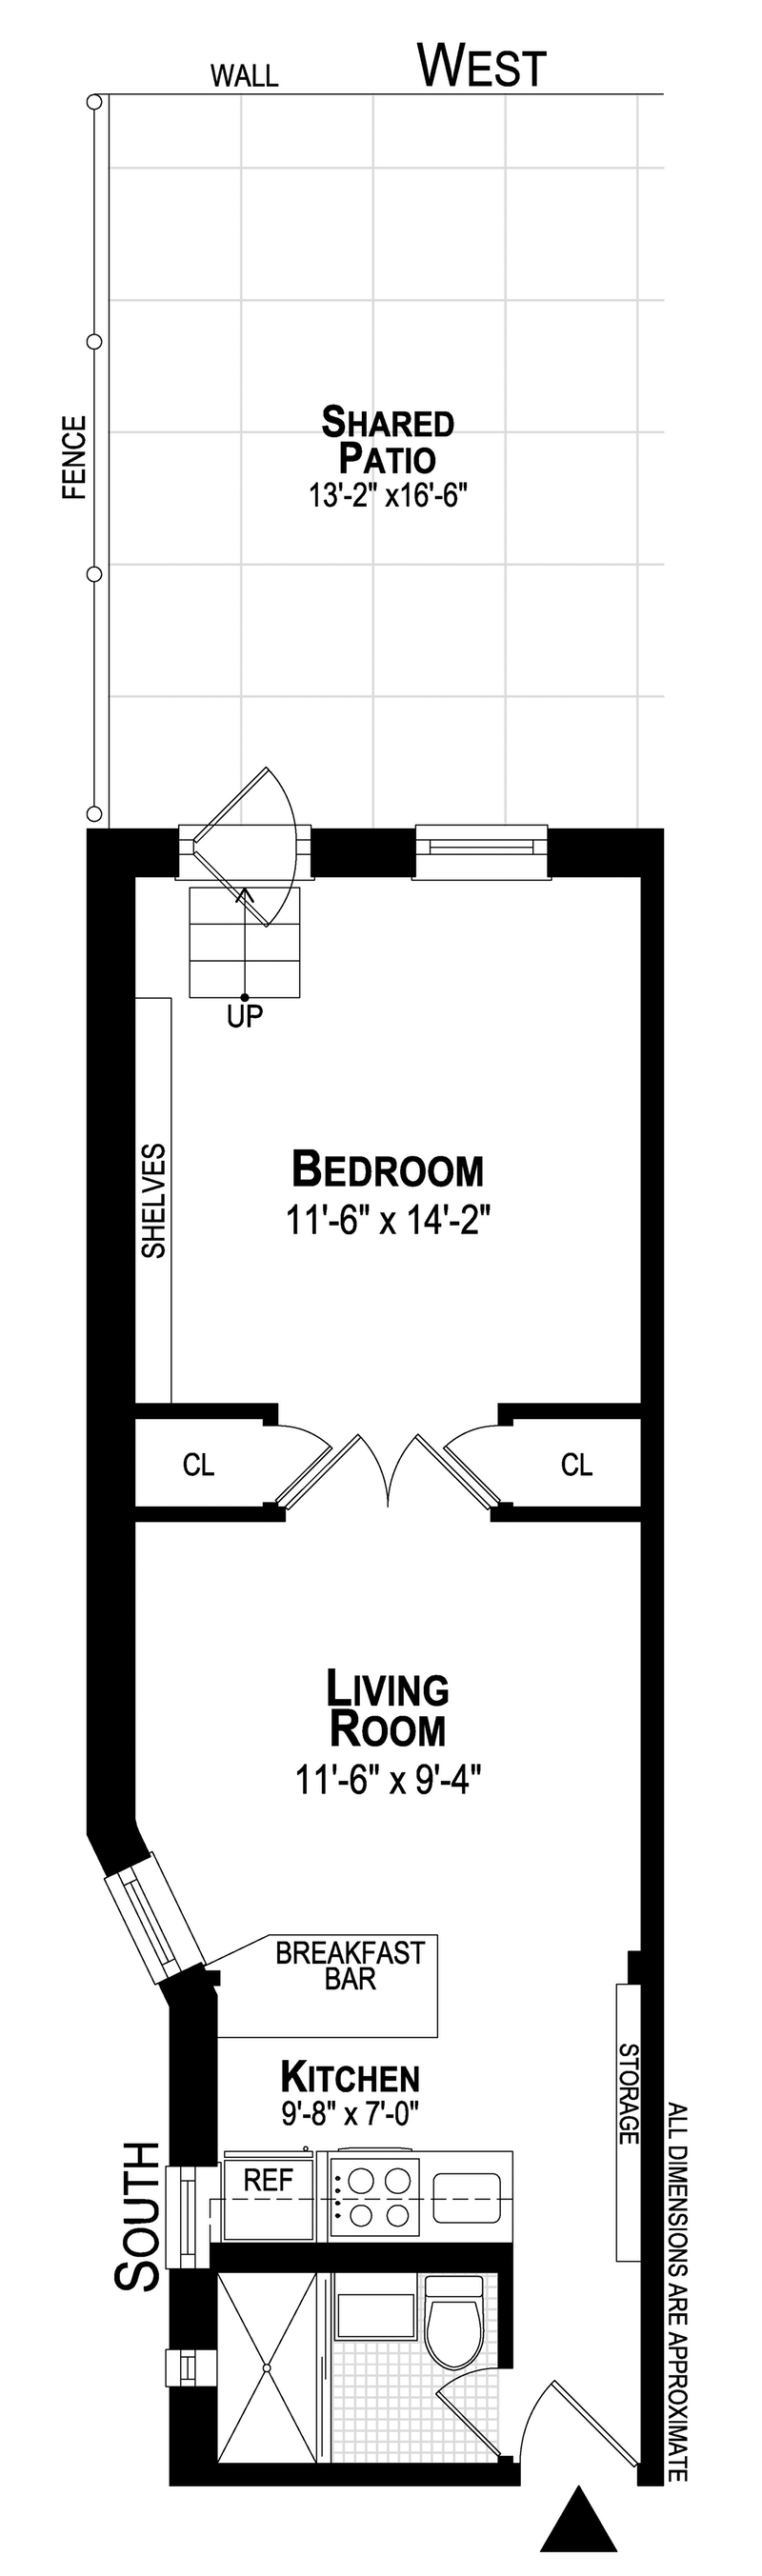 Floorplan for 139 Norfolk Street, A